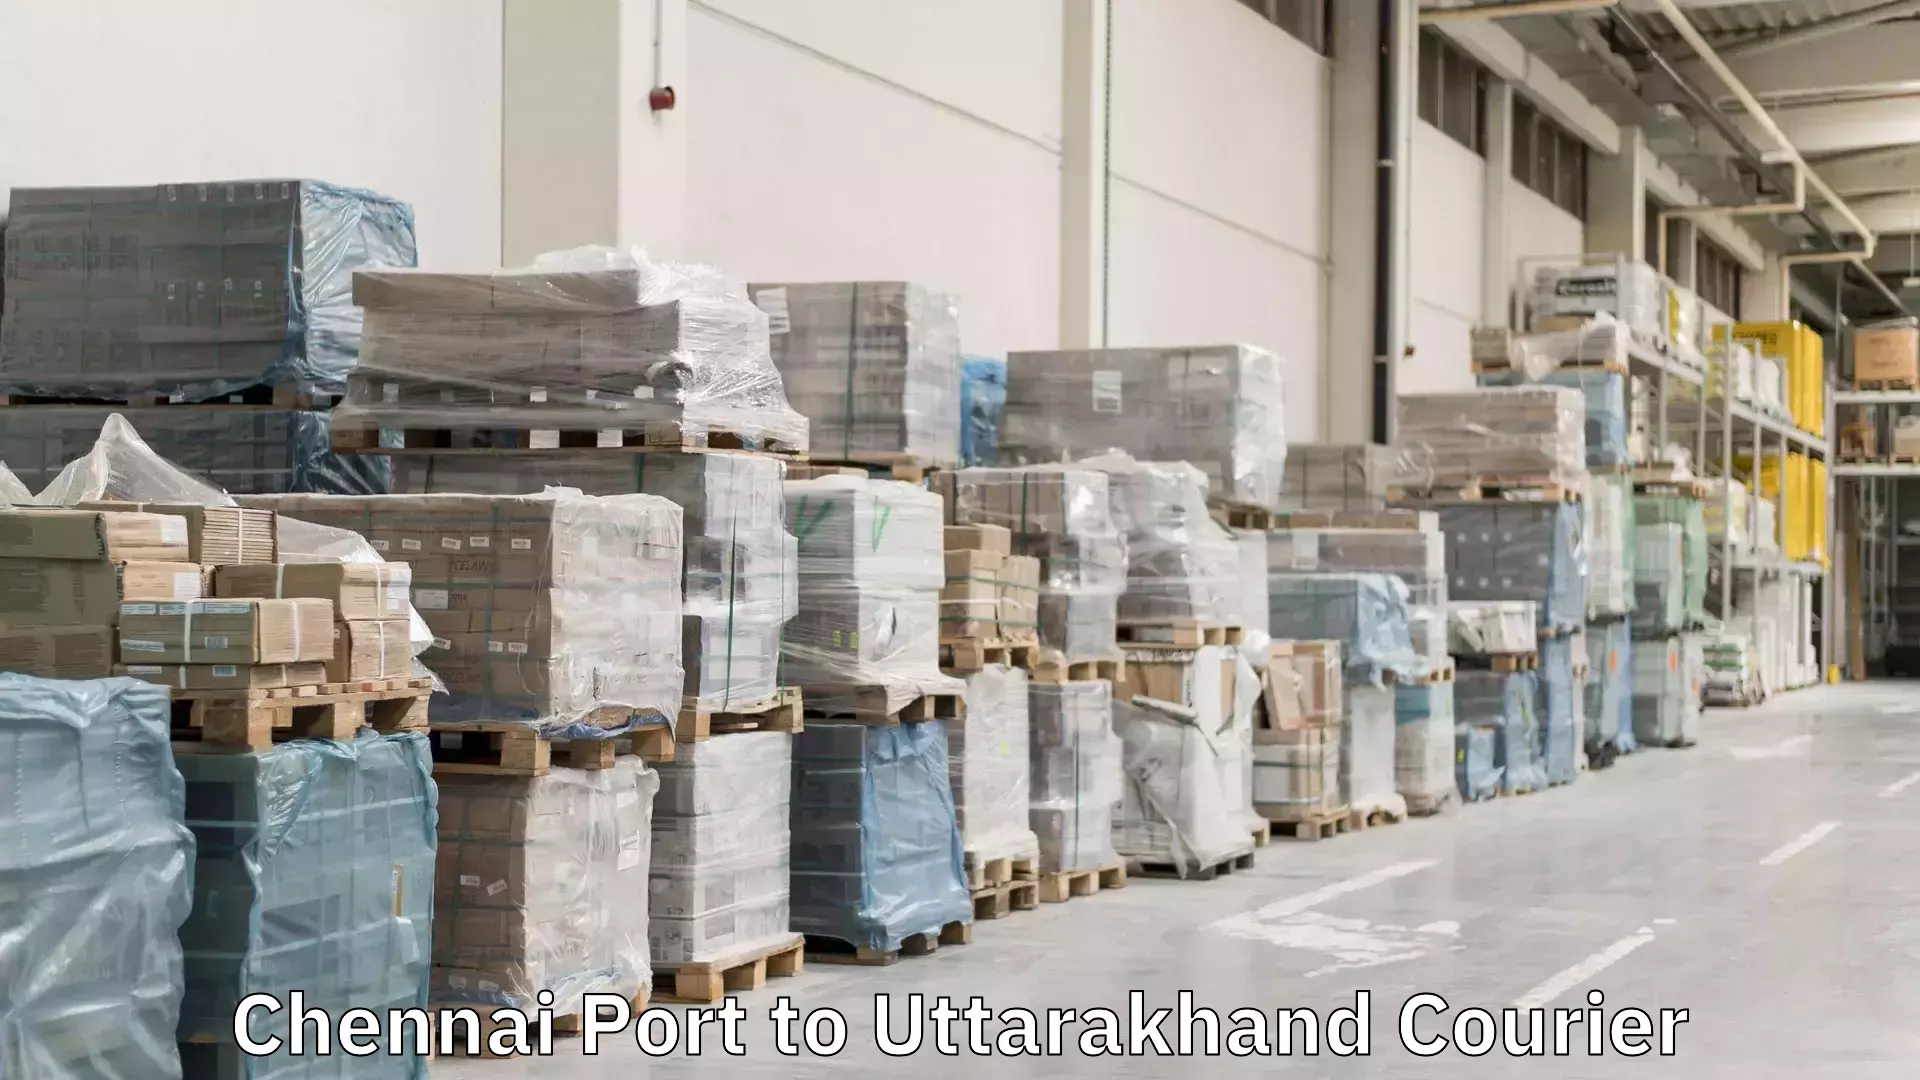 Express courier facilities Chennai Port to Uttarakhand